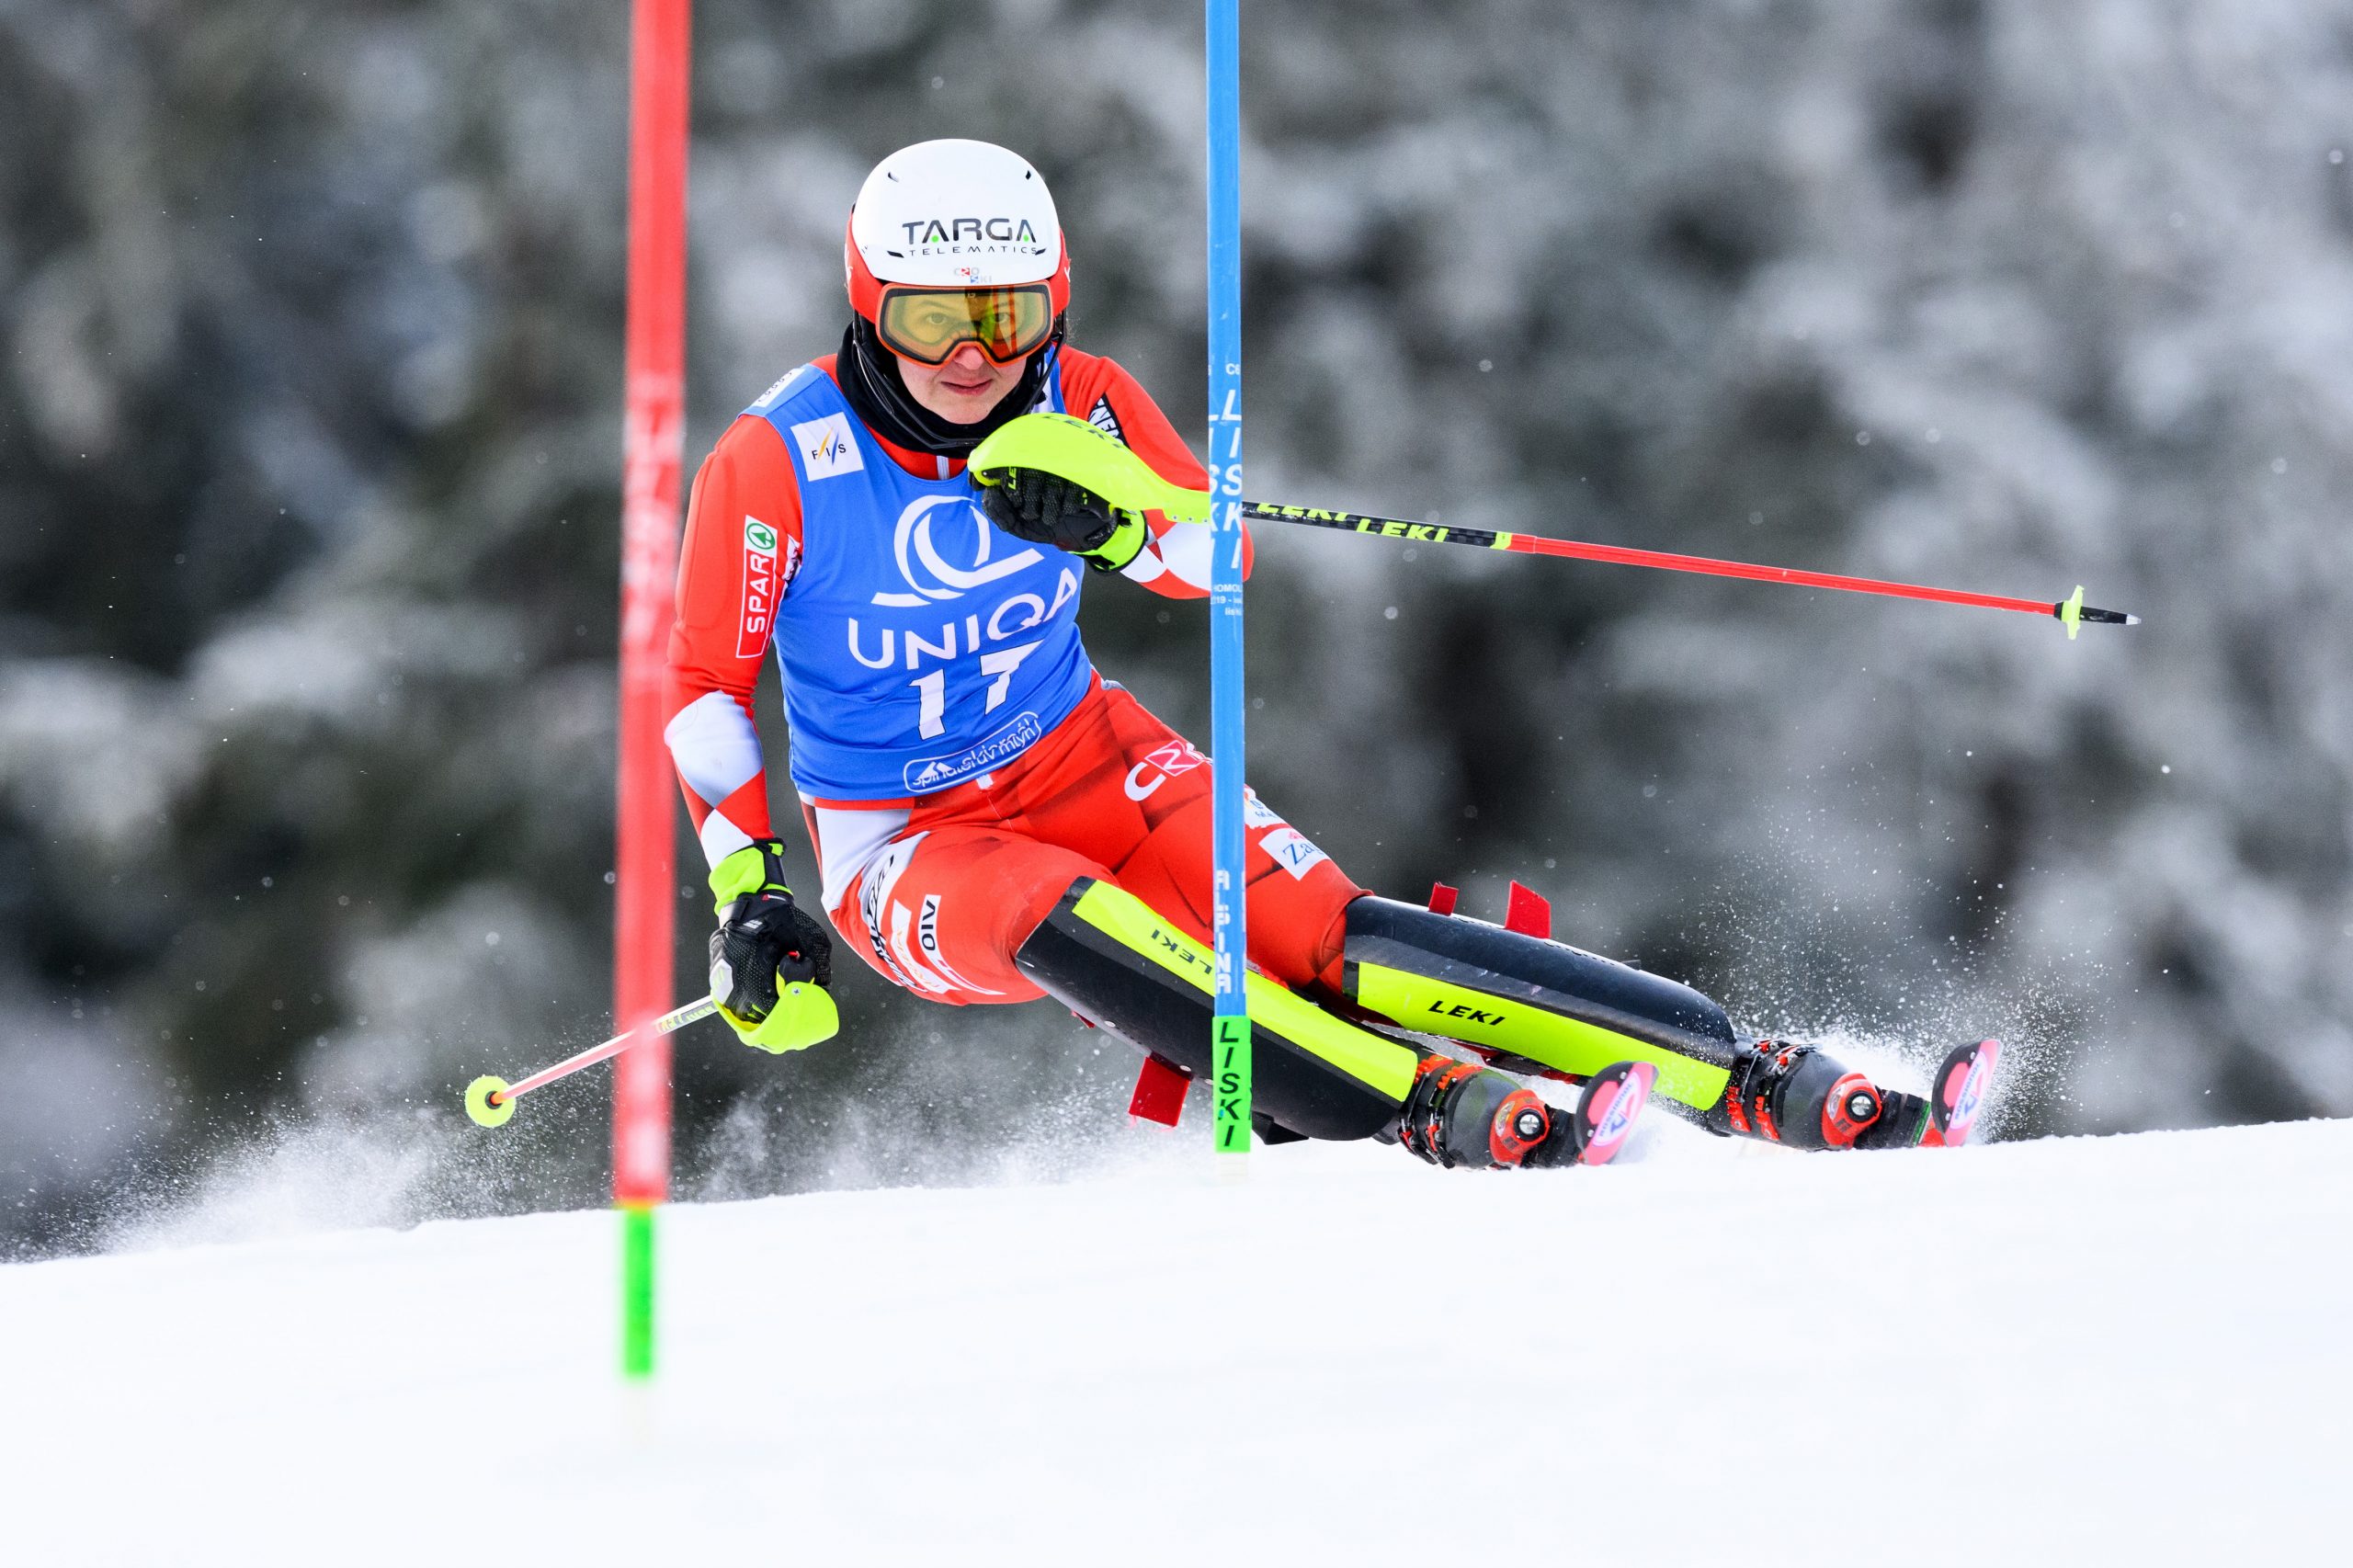 epa10437748 Zrinka Ljutic of Croatia in action during the first run of the Women's Slalom race at the FIS Alpine Skiing World Cup in Spindleruv Mlyn, Czech Republic, 29 January 2023.  EPA/VLASTIMIL VACEK